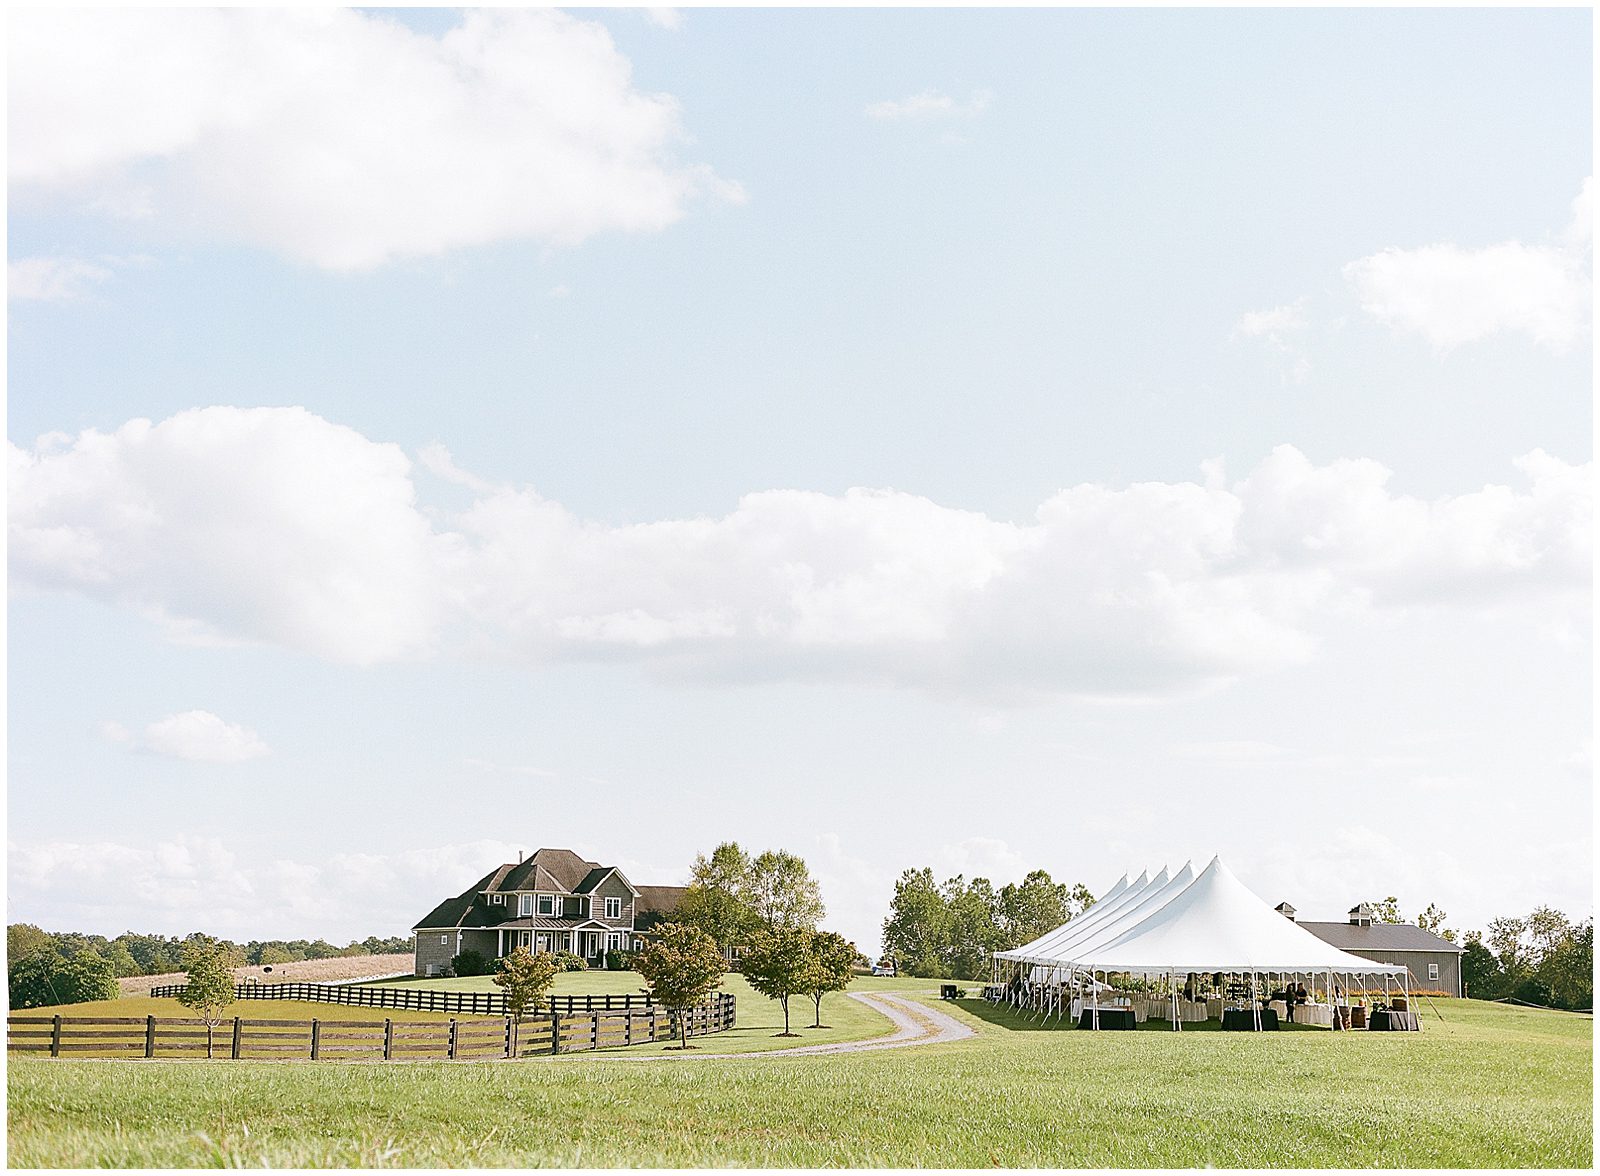 Lewisburg West Virginia Farm with Wedding Tent Photo